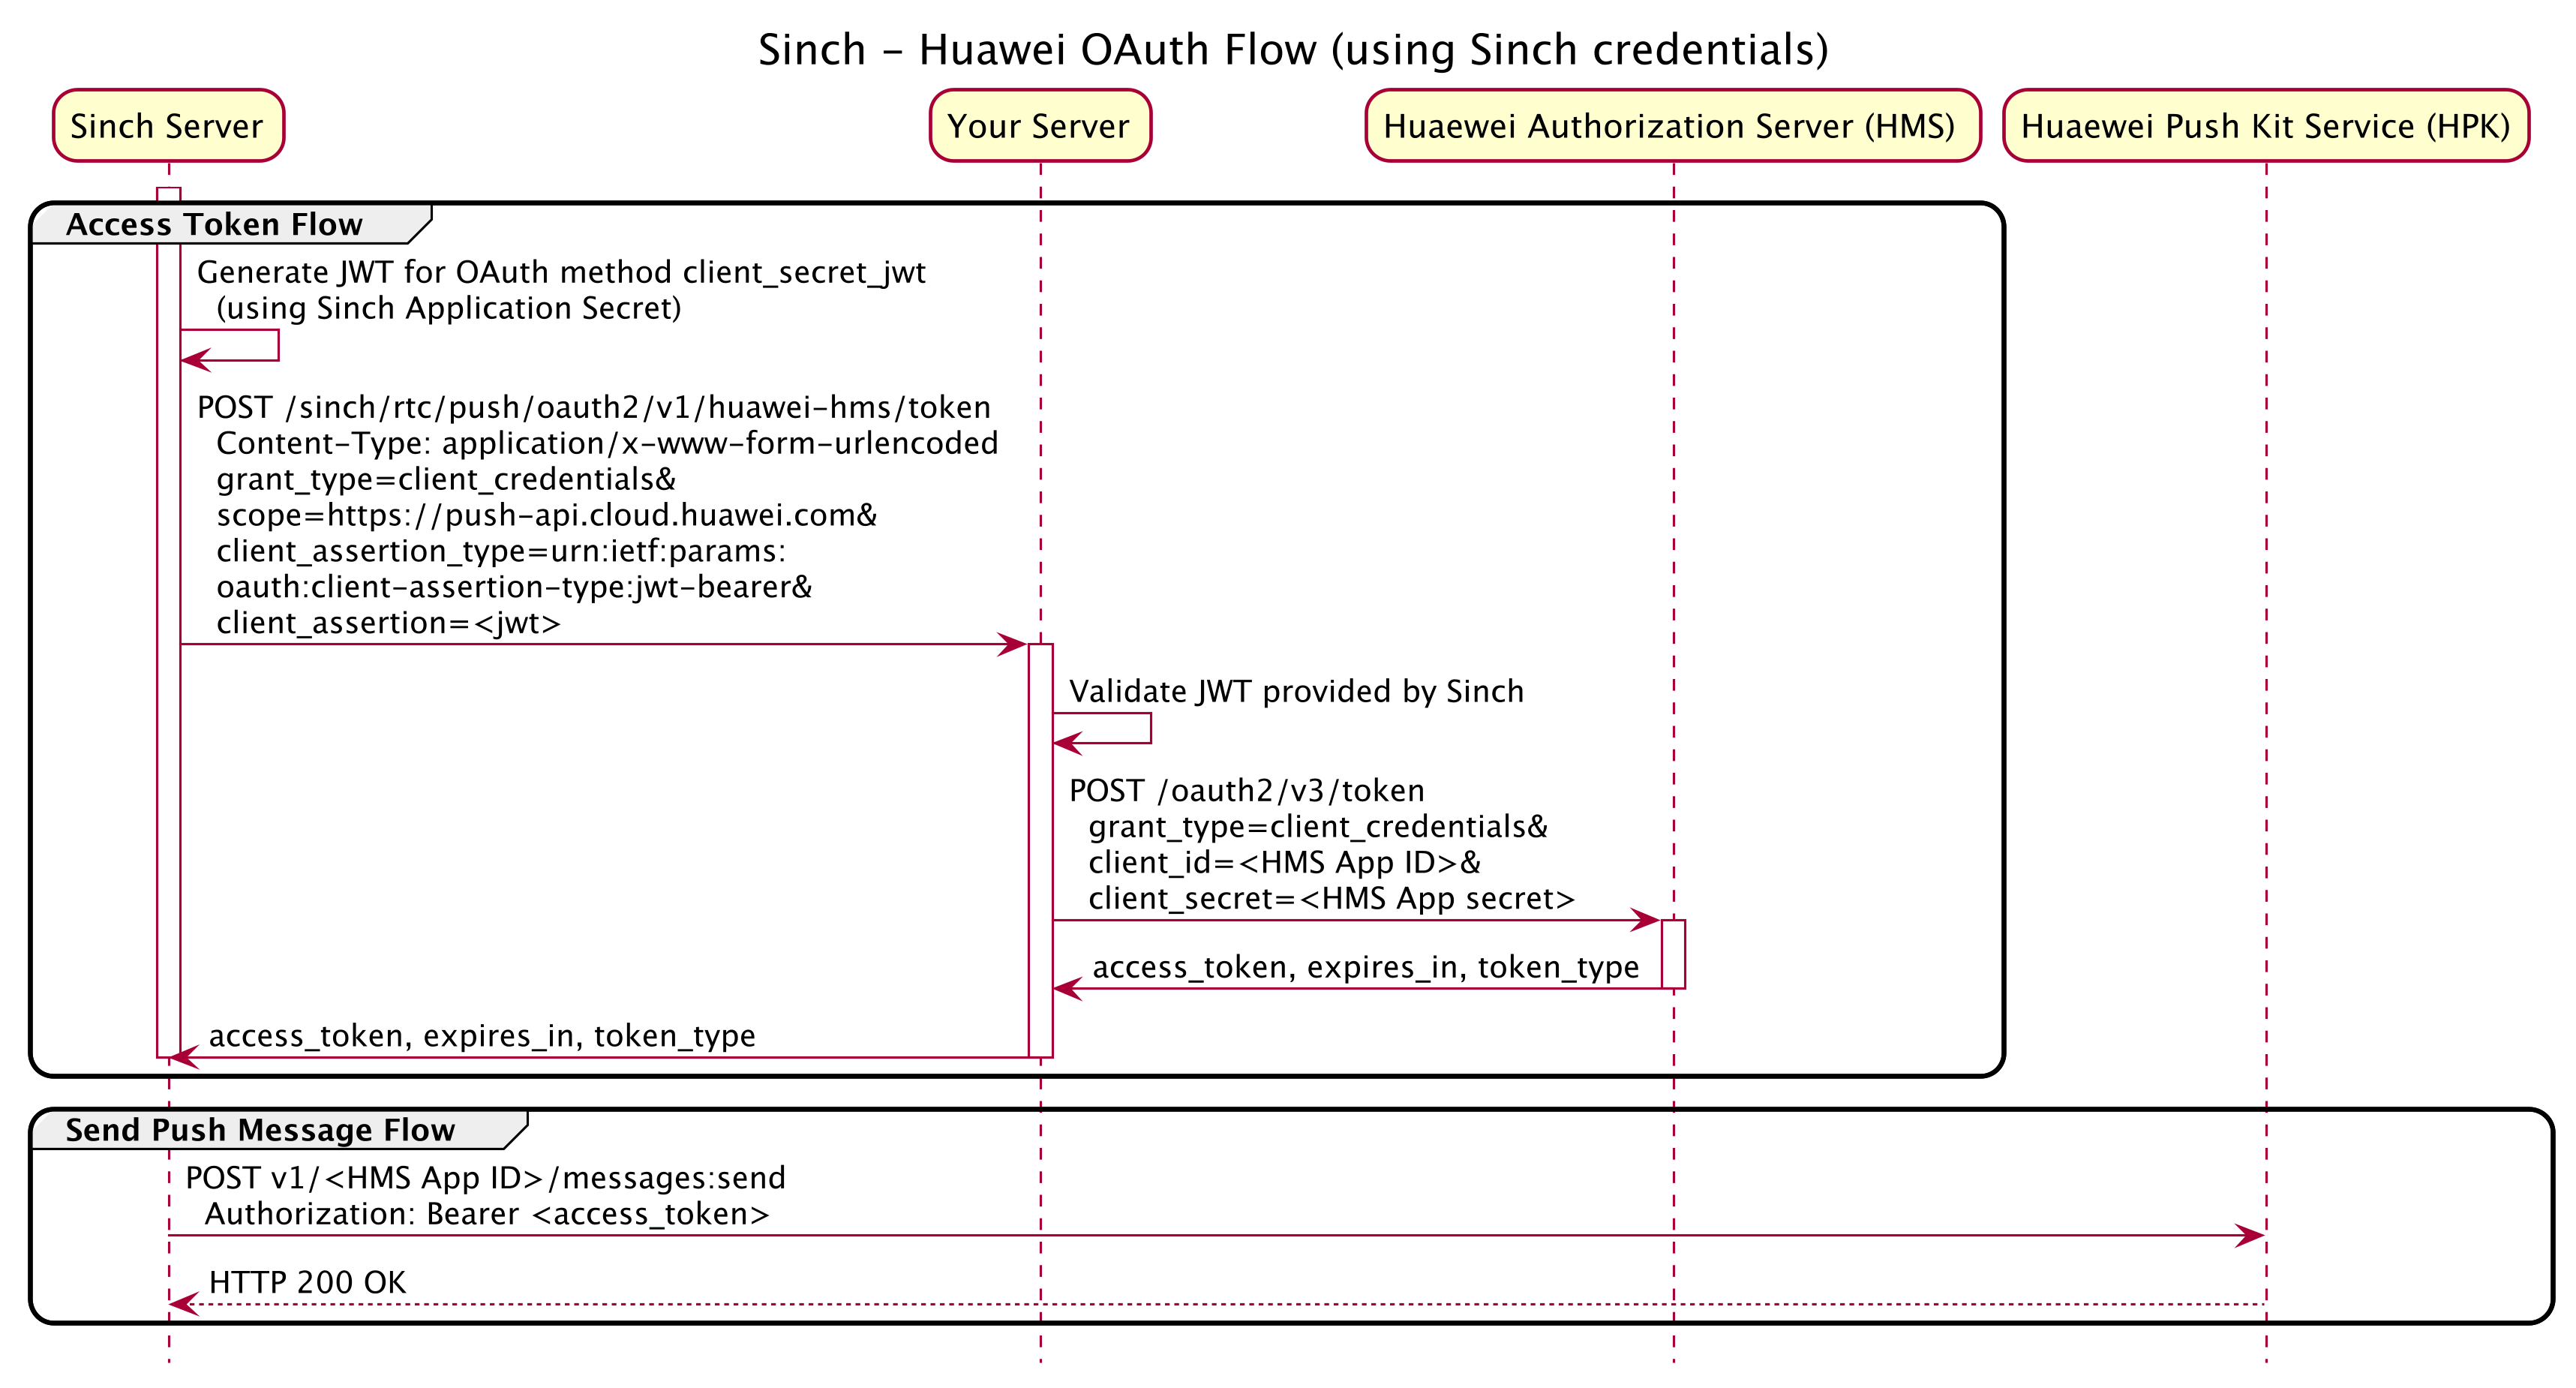 Sinch - Huawei OAuth Flow using Sinch credentials